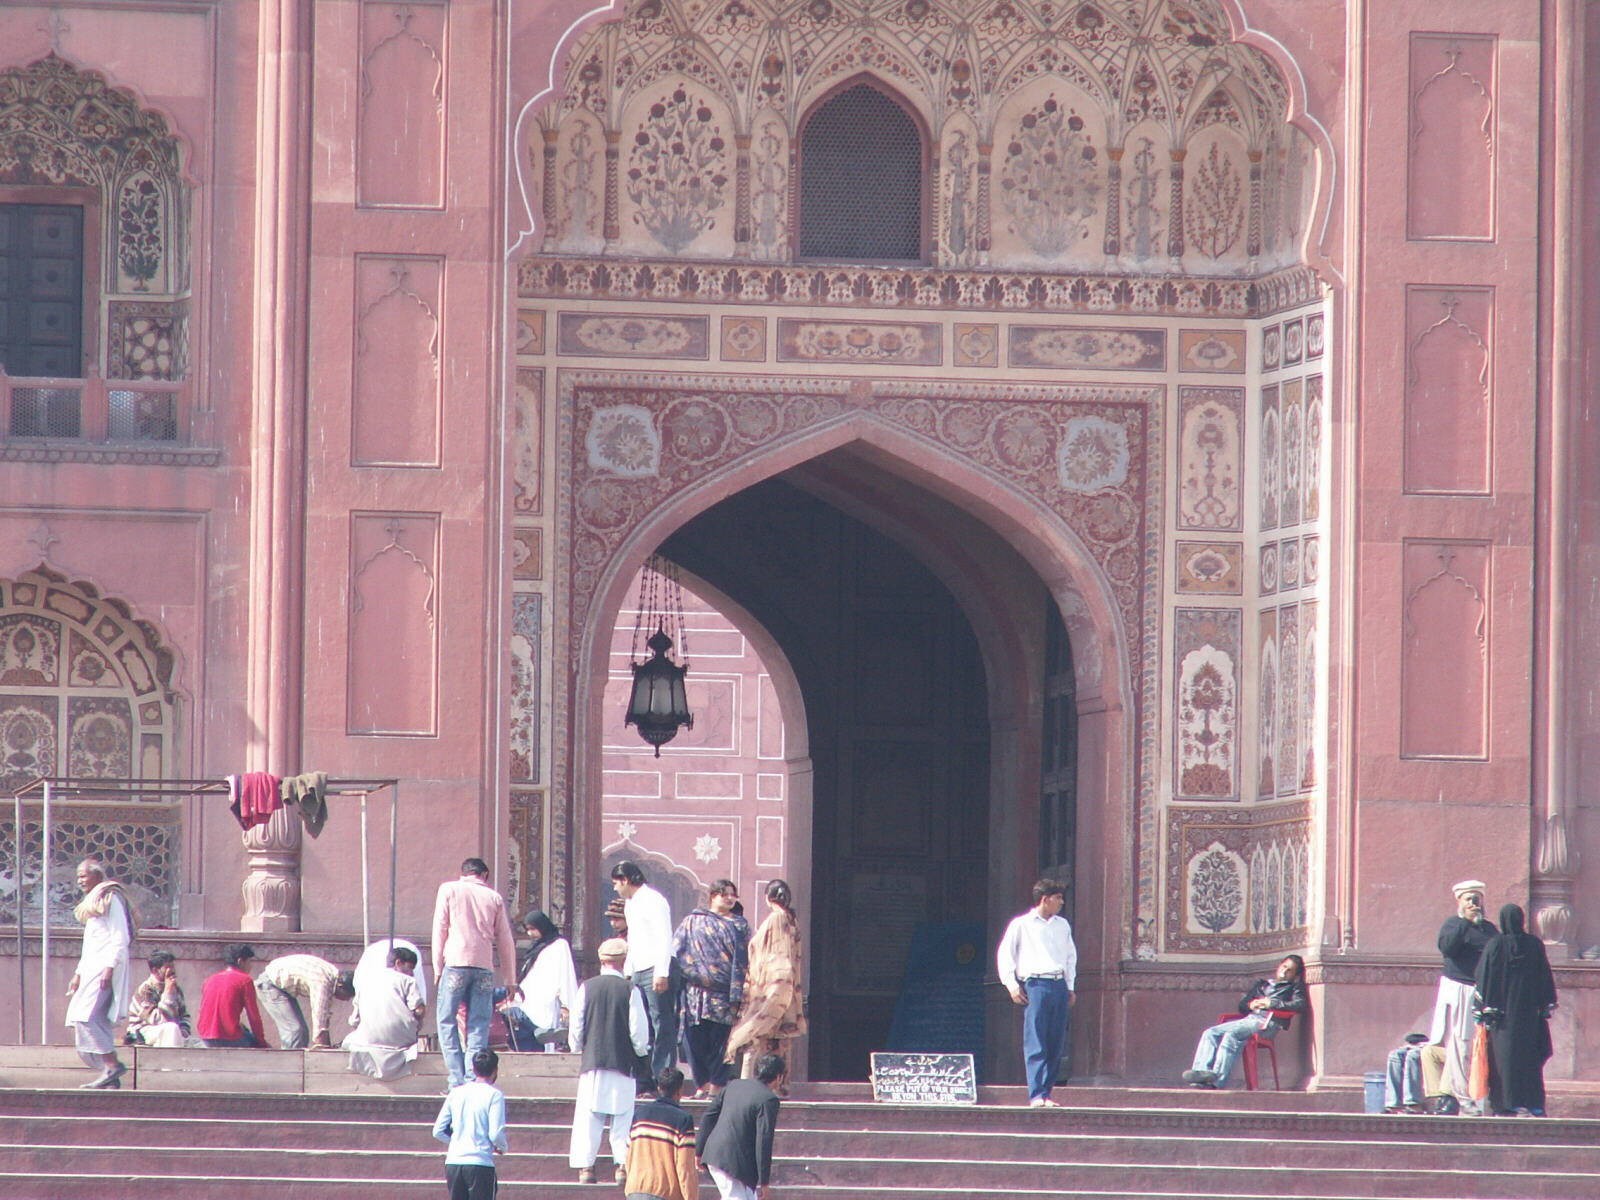 Gate of the Badshahi Mosque in Lahore, Pakistan